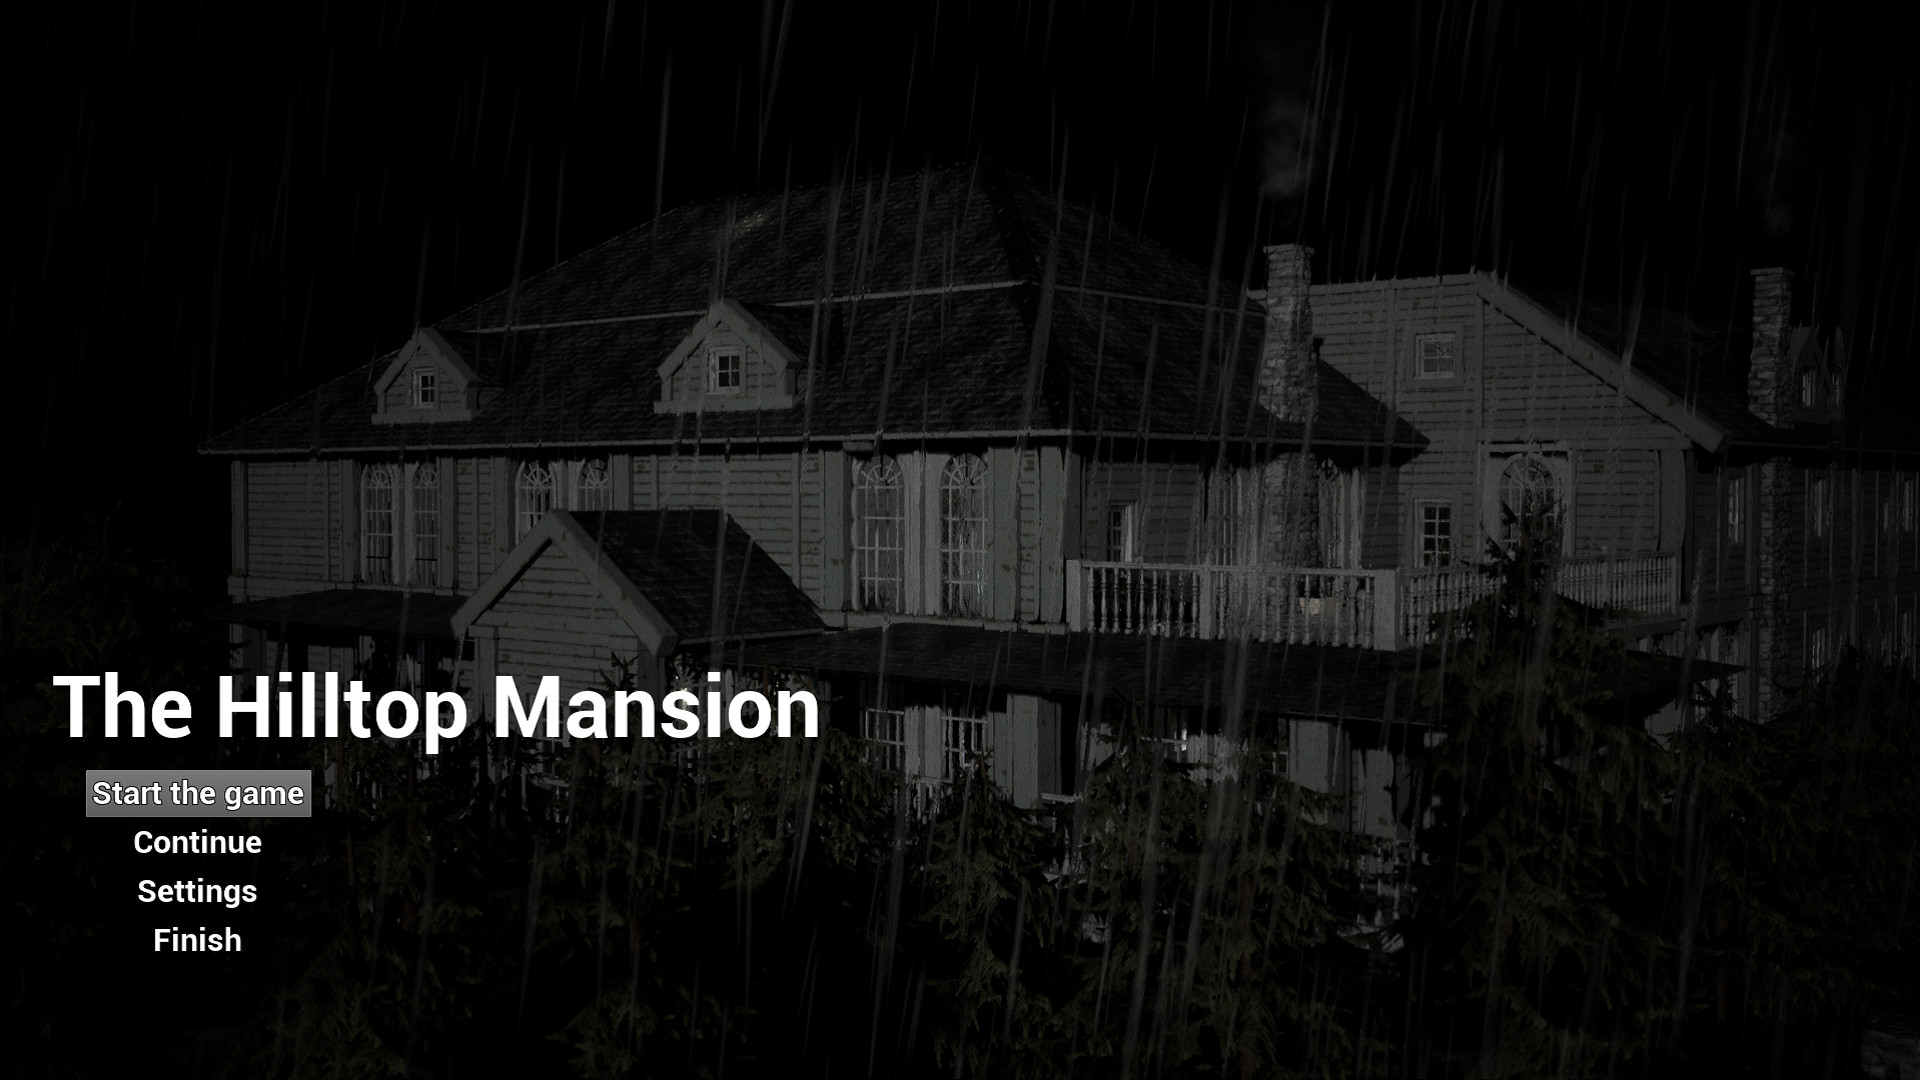 The Hilltop Mansion Free Download